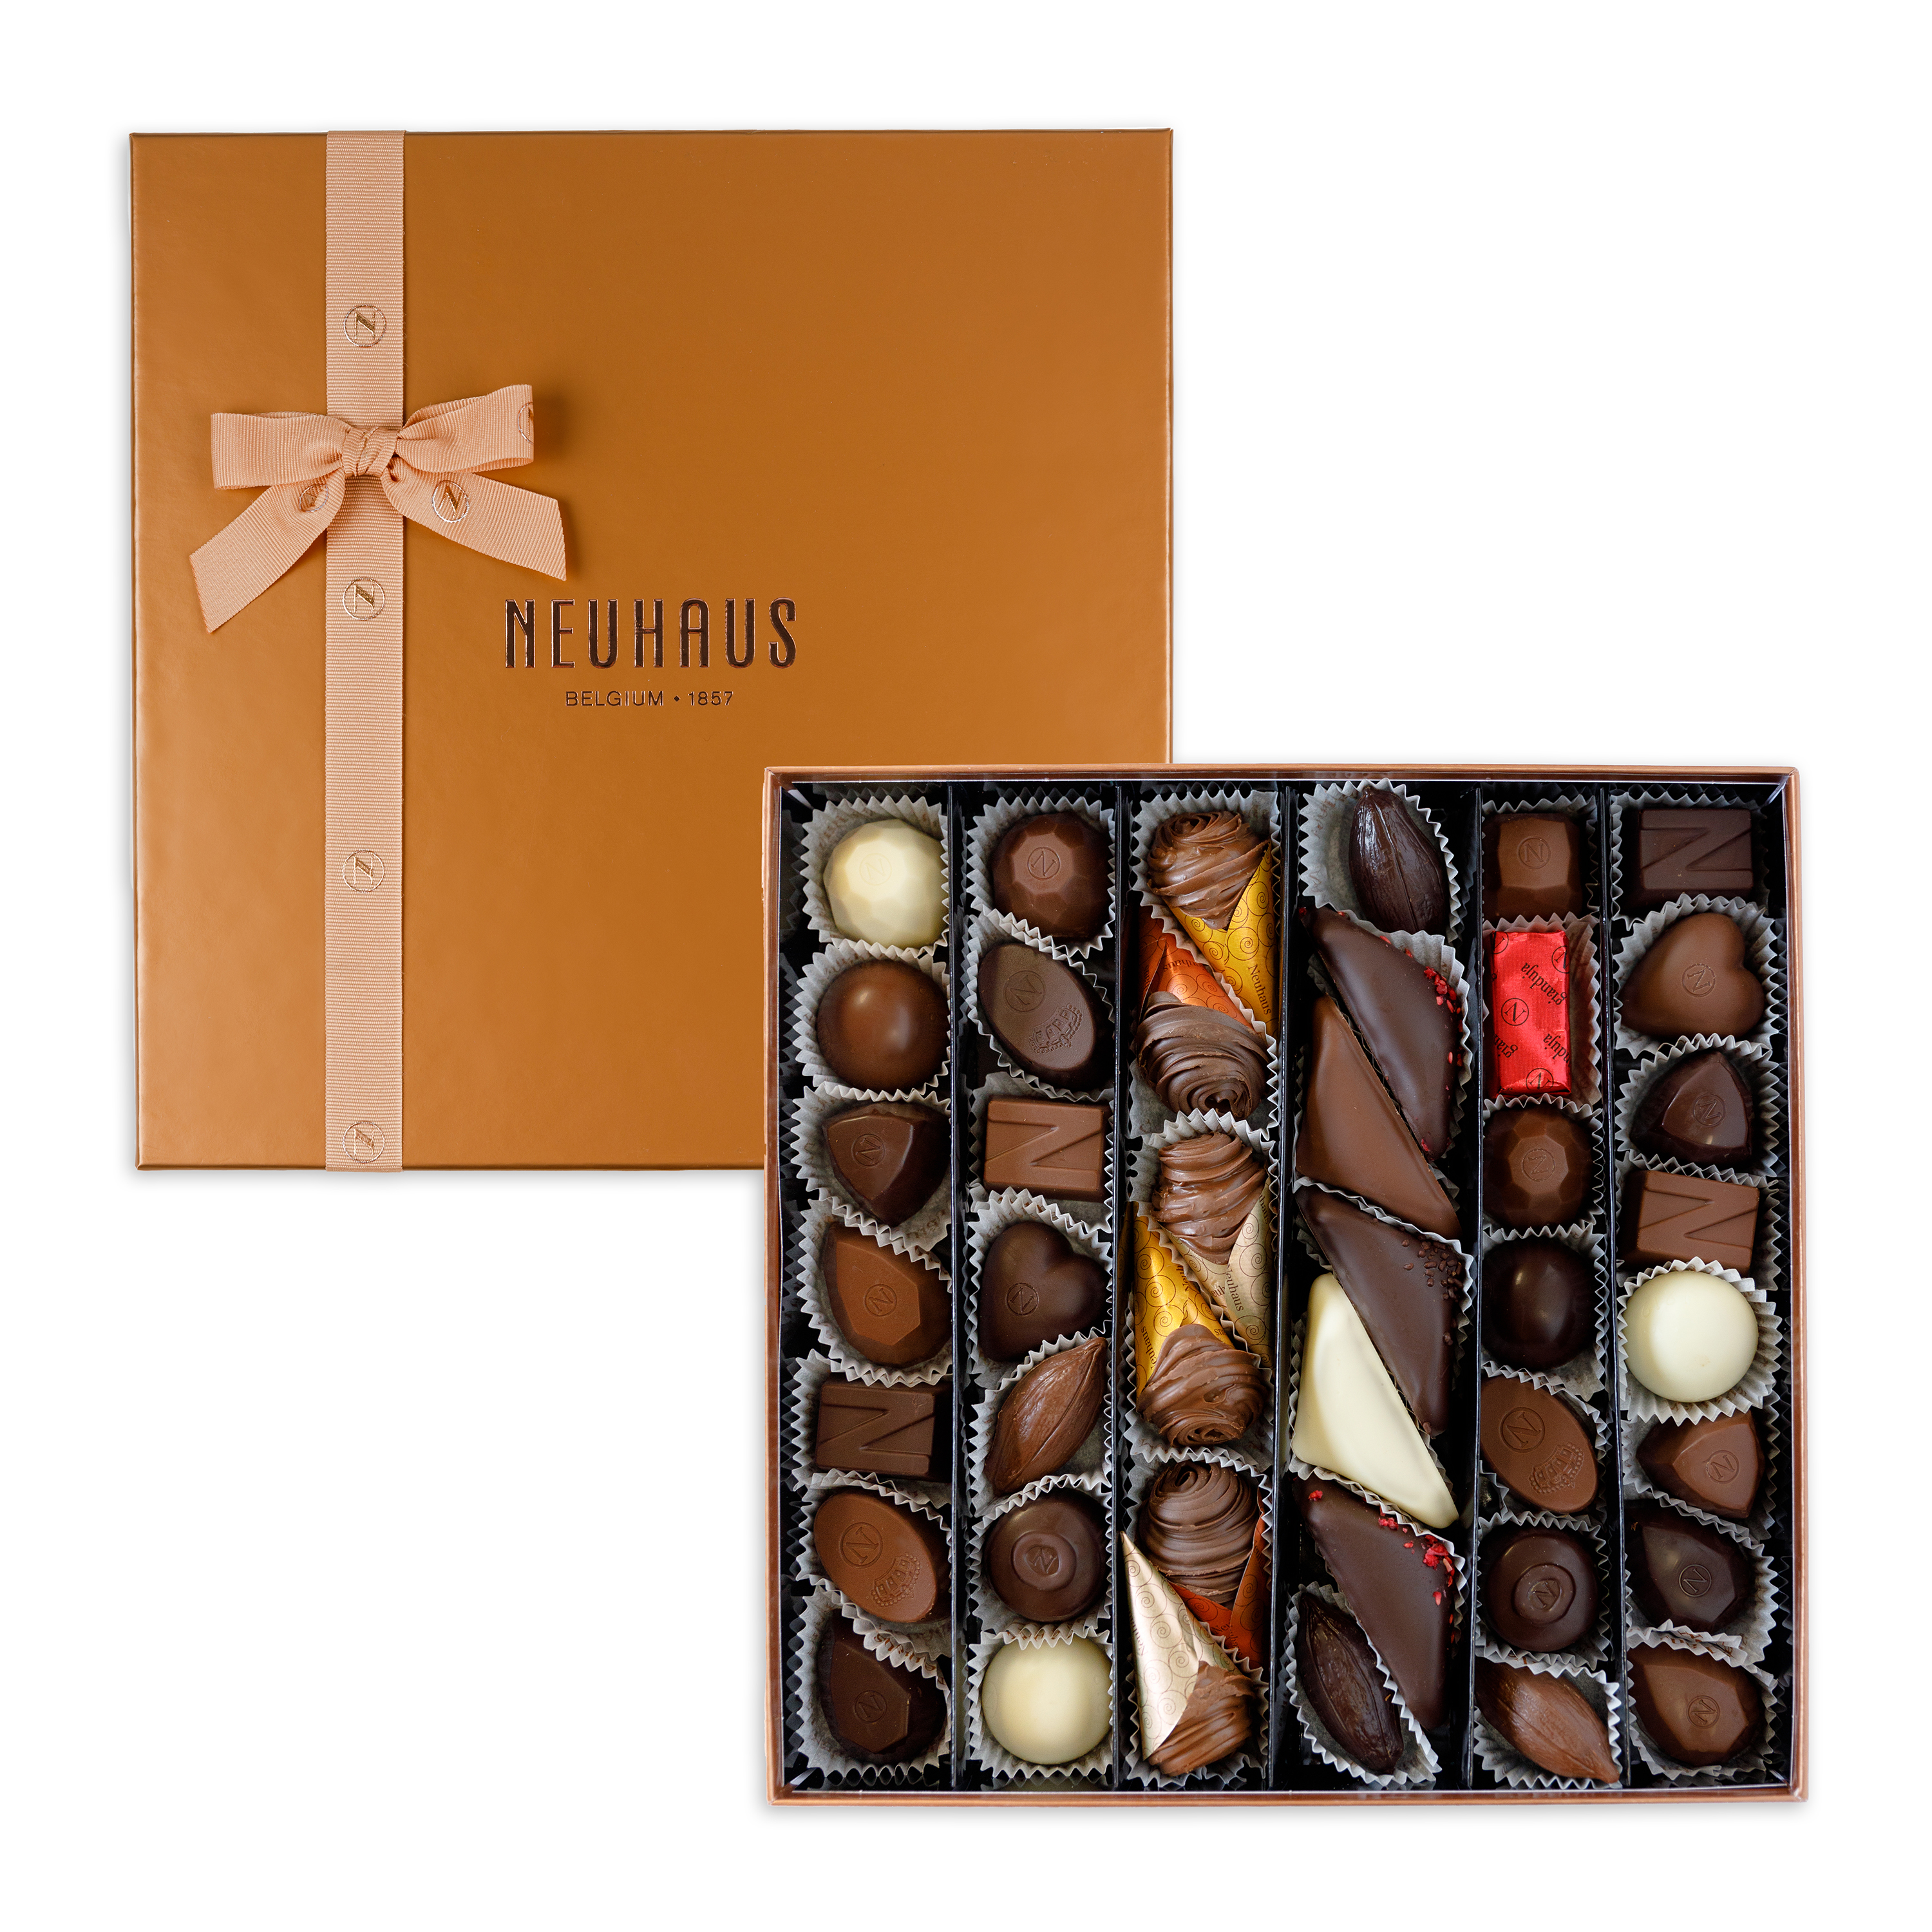 Made in Belgium, Neuhaus Chocolates